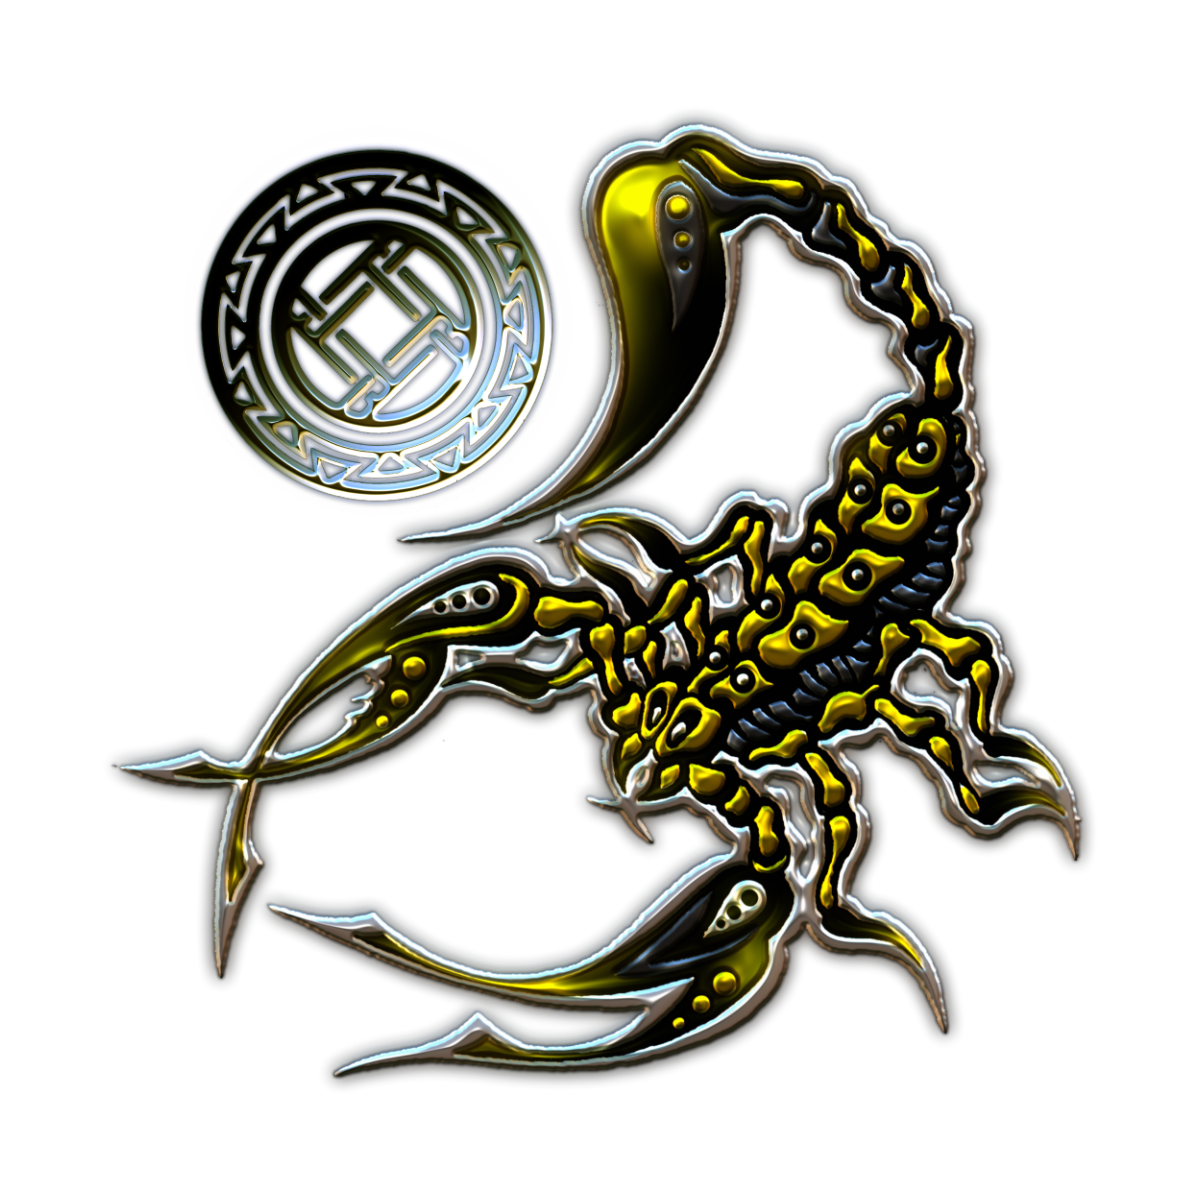 Скорпион s1e6. Скорпион. Скорпион картинки. Значок скорпиона. Скорпион логотип.